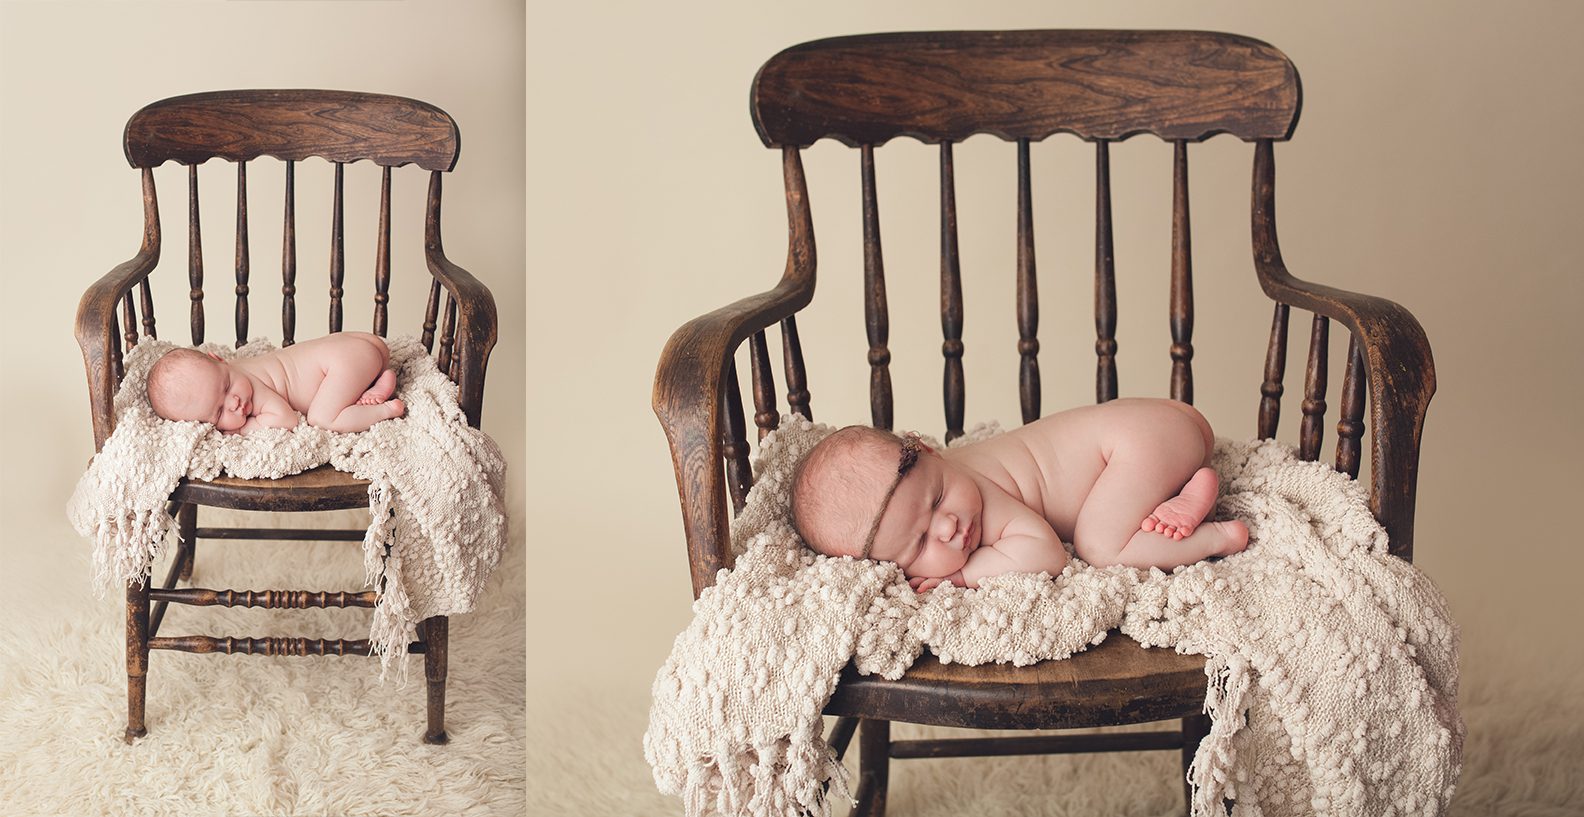 edmonton newborn photographer - on chair